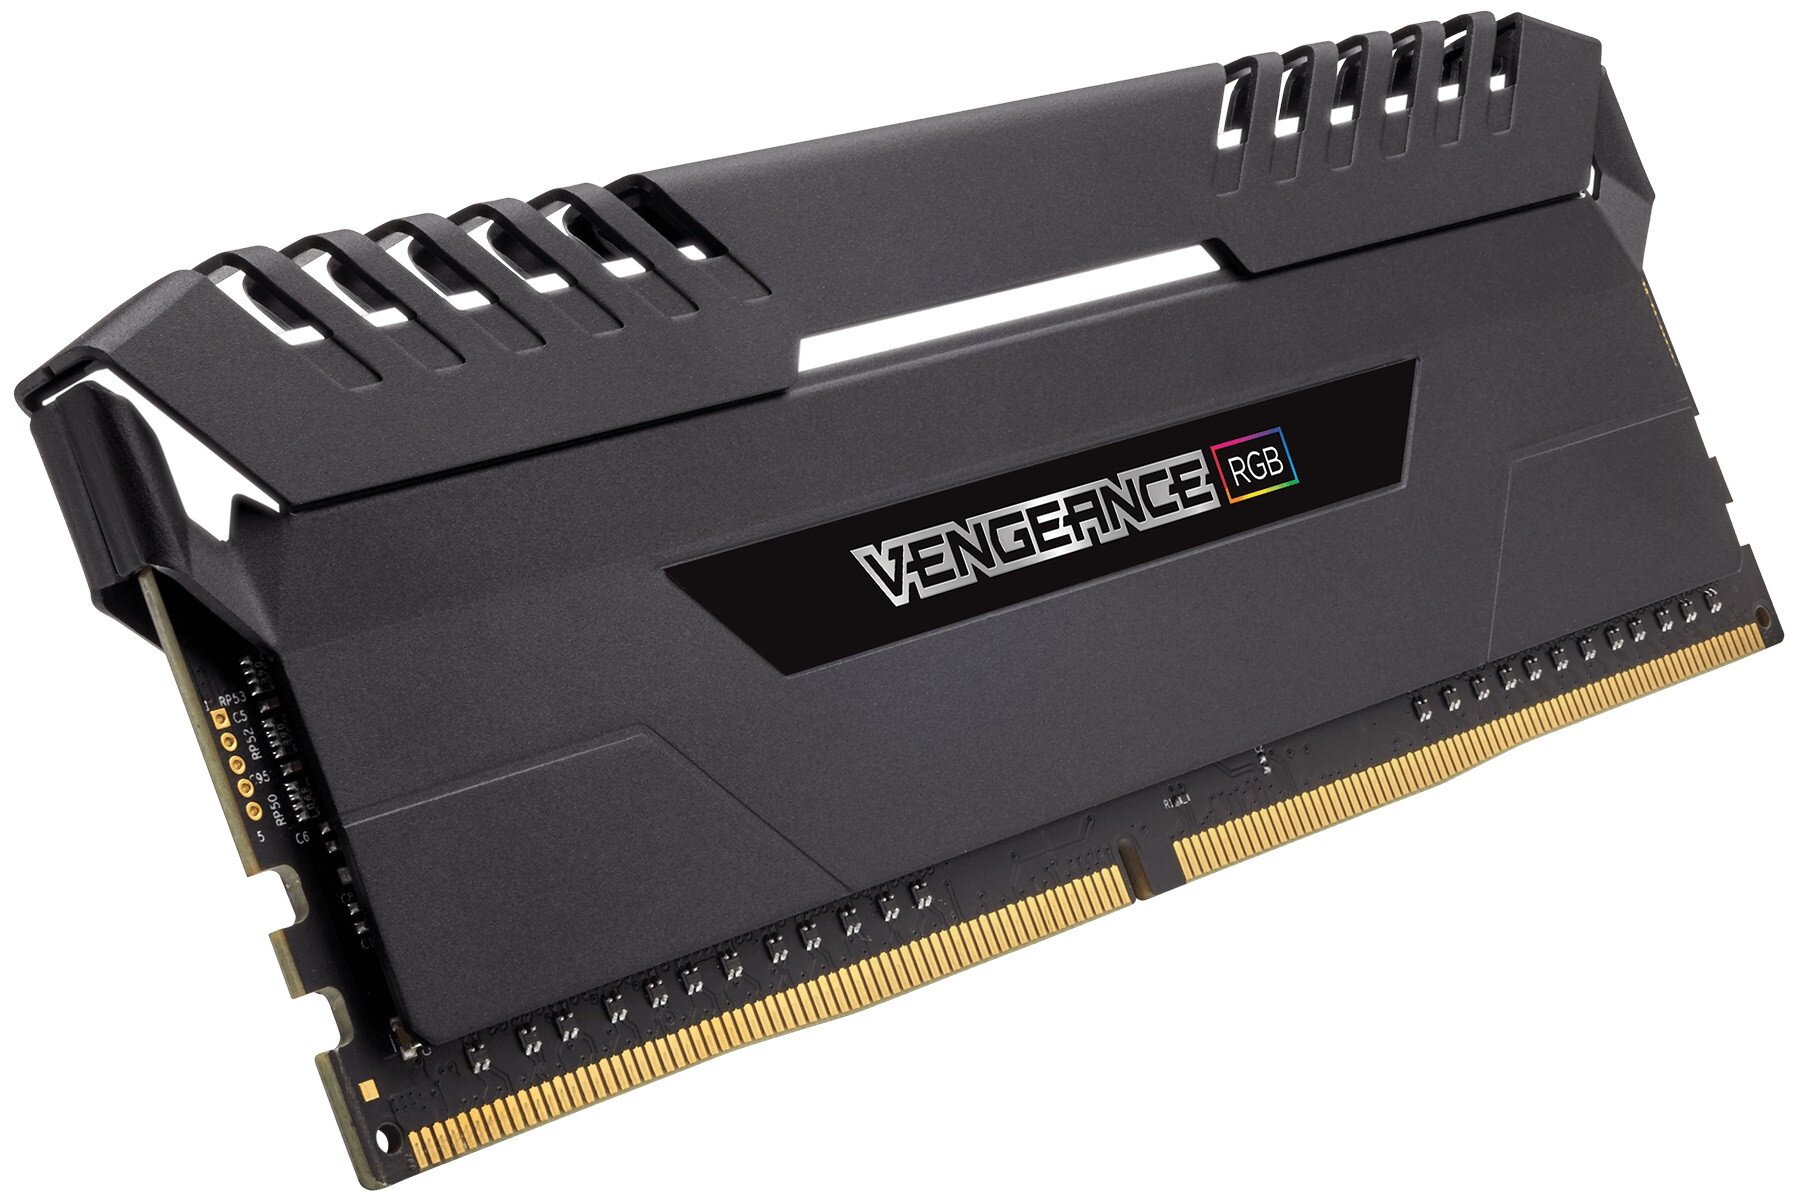 Corsair Vengeance RGB 32GB (4 x 8GB) DDR4 DRAM 3200MHz C16 Memory Kit